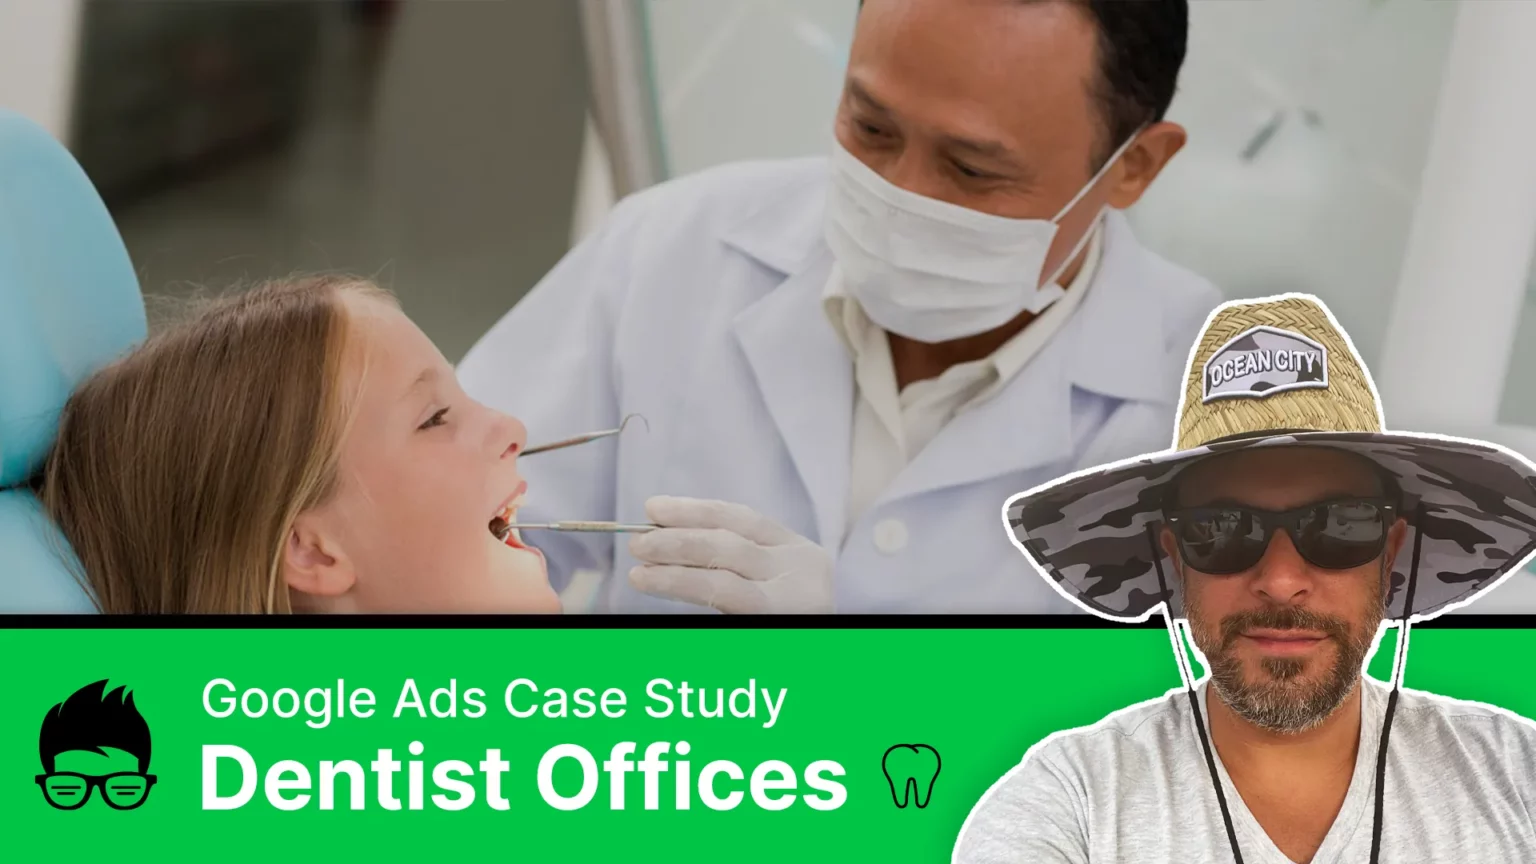 Google Ads Case Study - Dentist Office PPC Ads